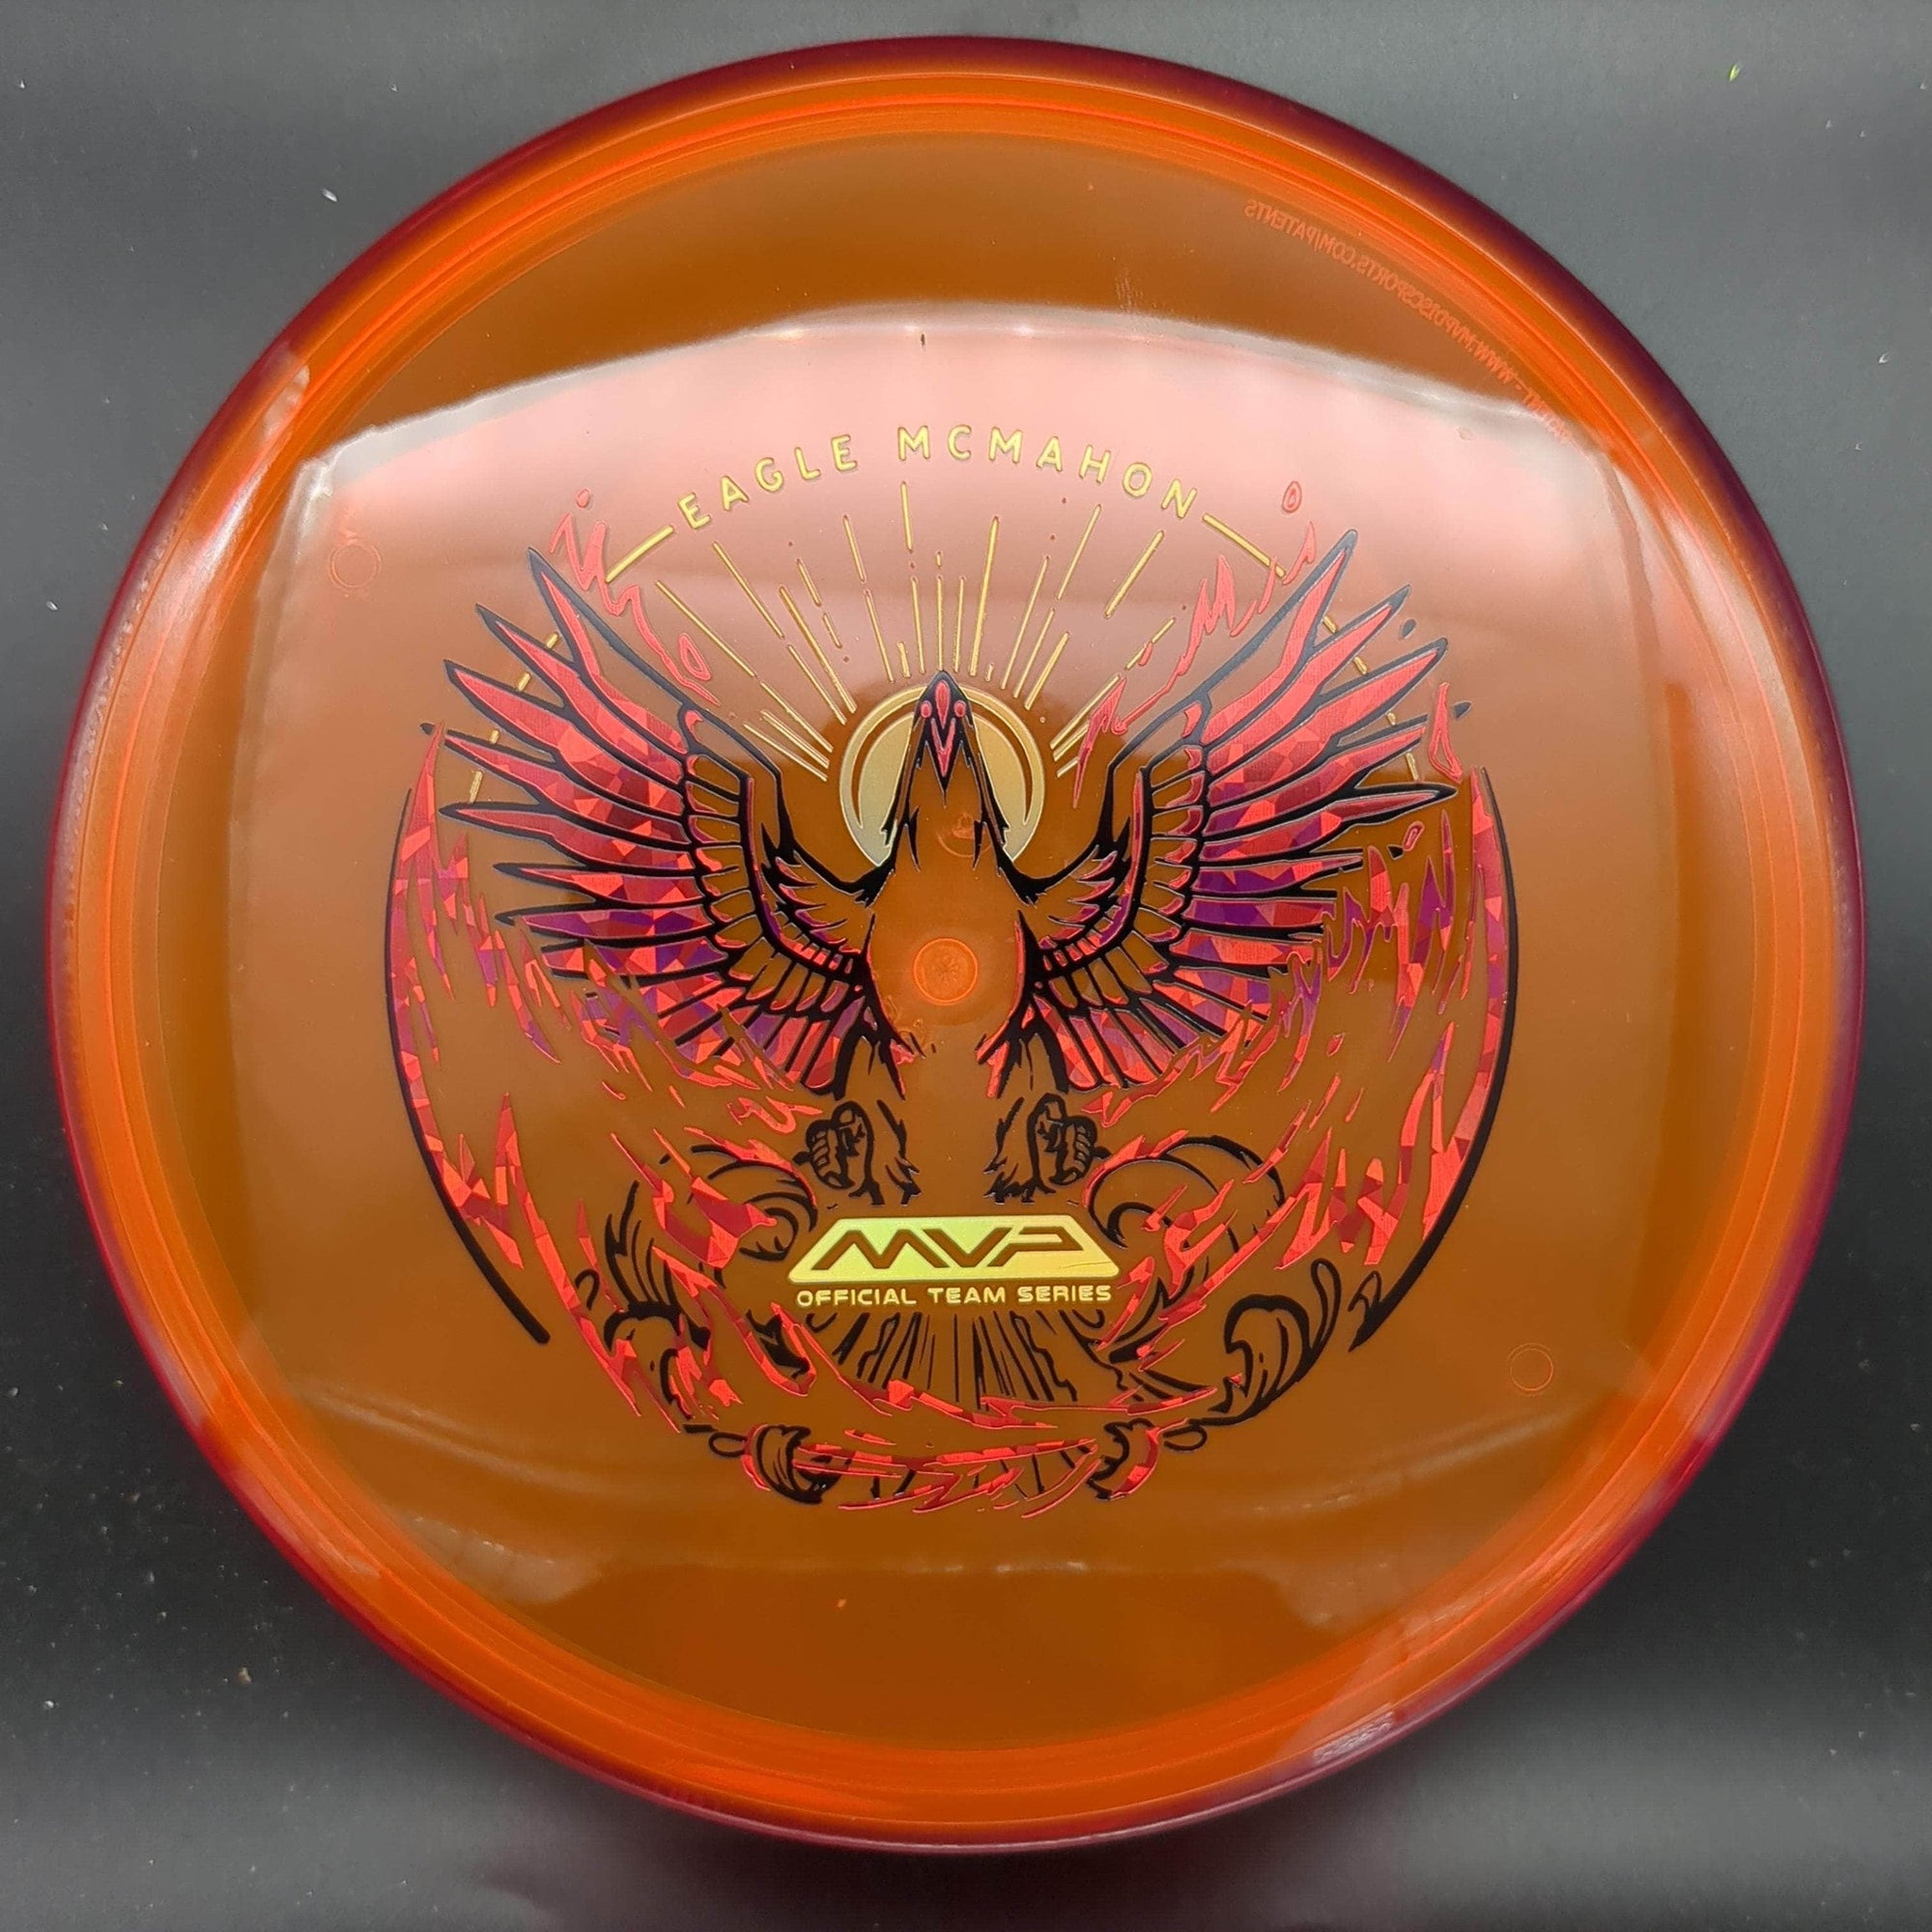 Axiom Putter Red Rim Orange Plate 173g Envy, Prism Proton, Eagle McMahon Special Edition